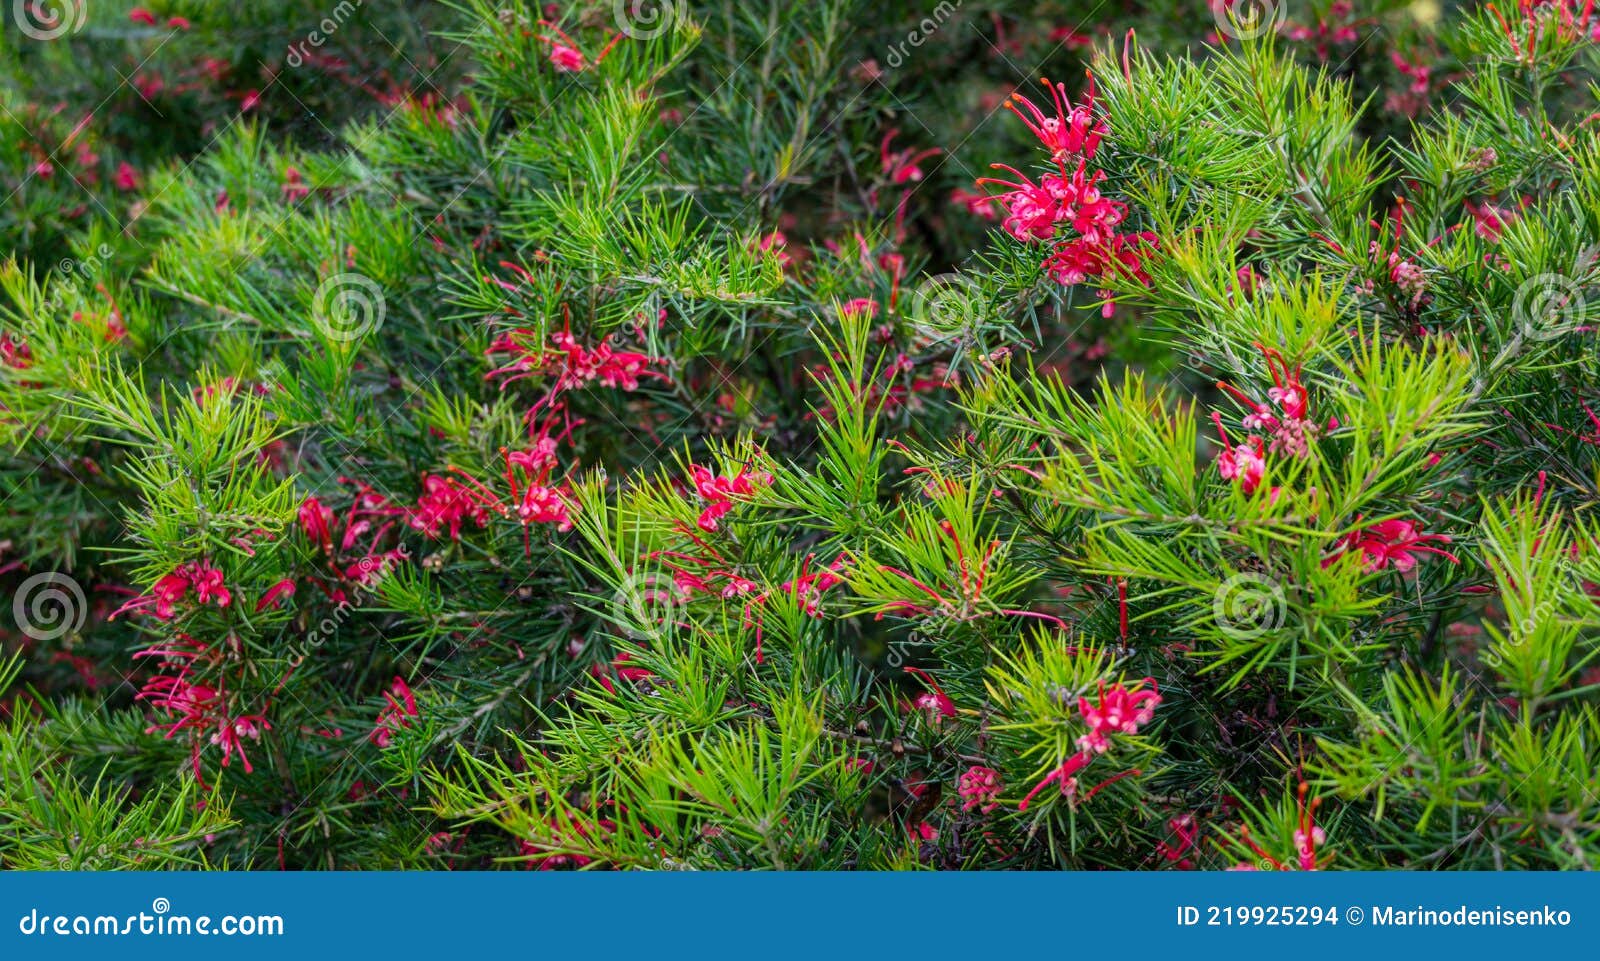 pink flowers of grevillea juniperina canberra gem and spiny leaves,  known as juniper-leaf grevillea or prickly spider-flower.